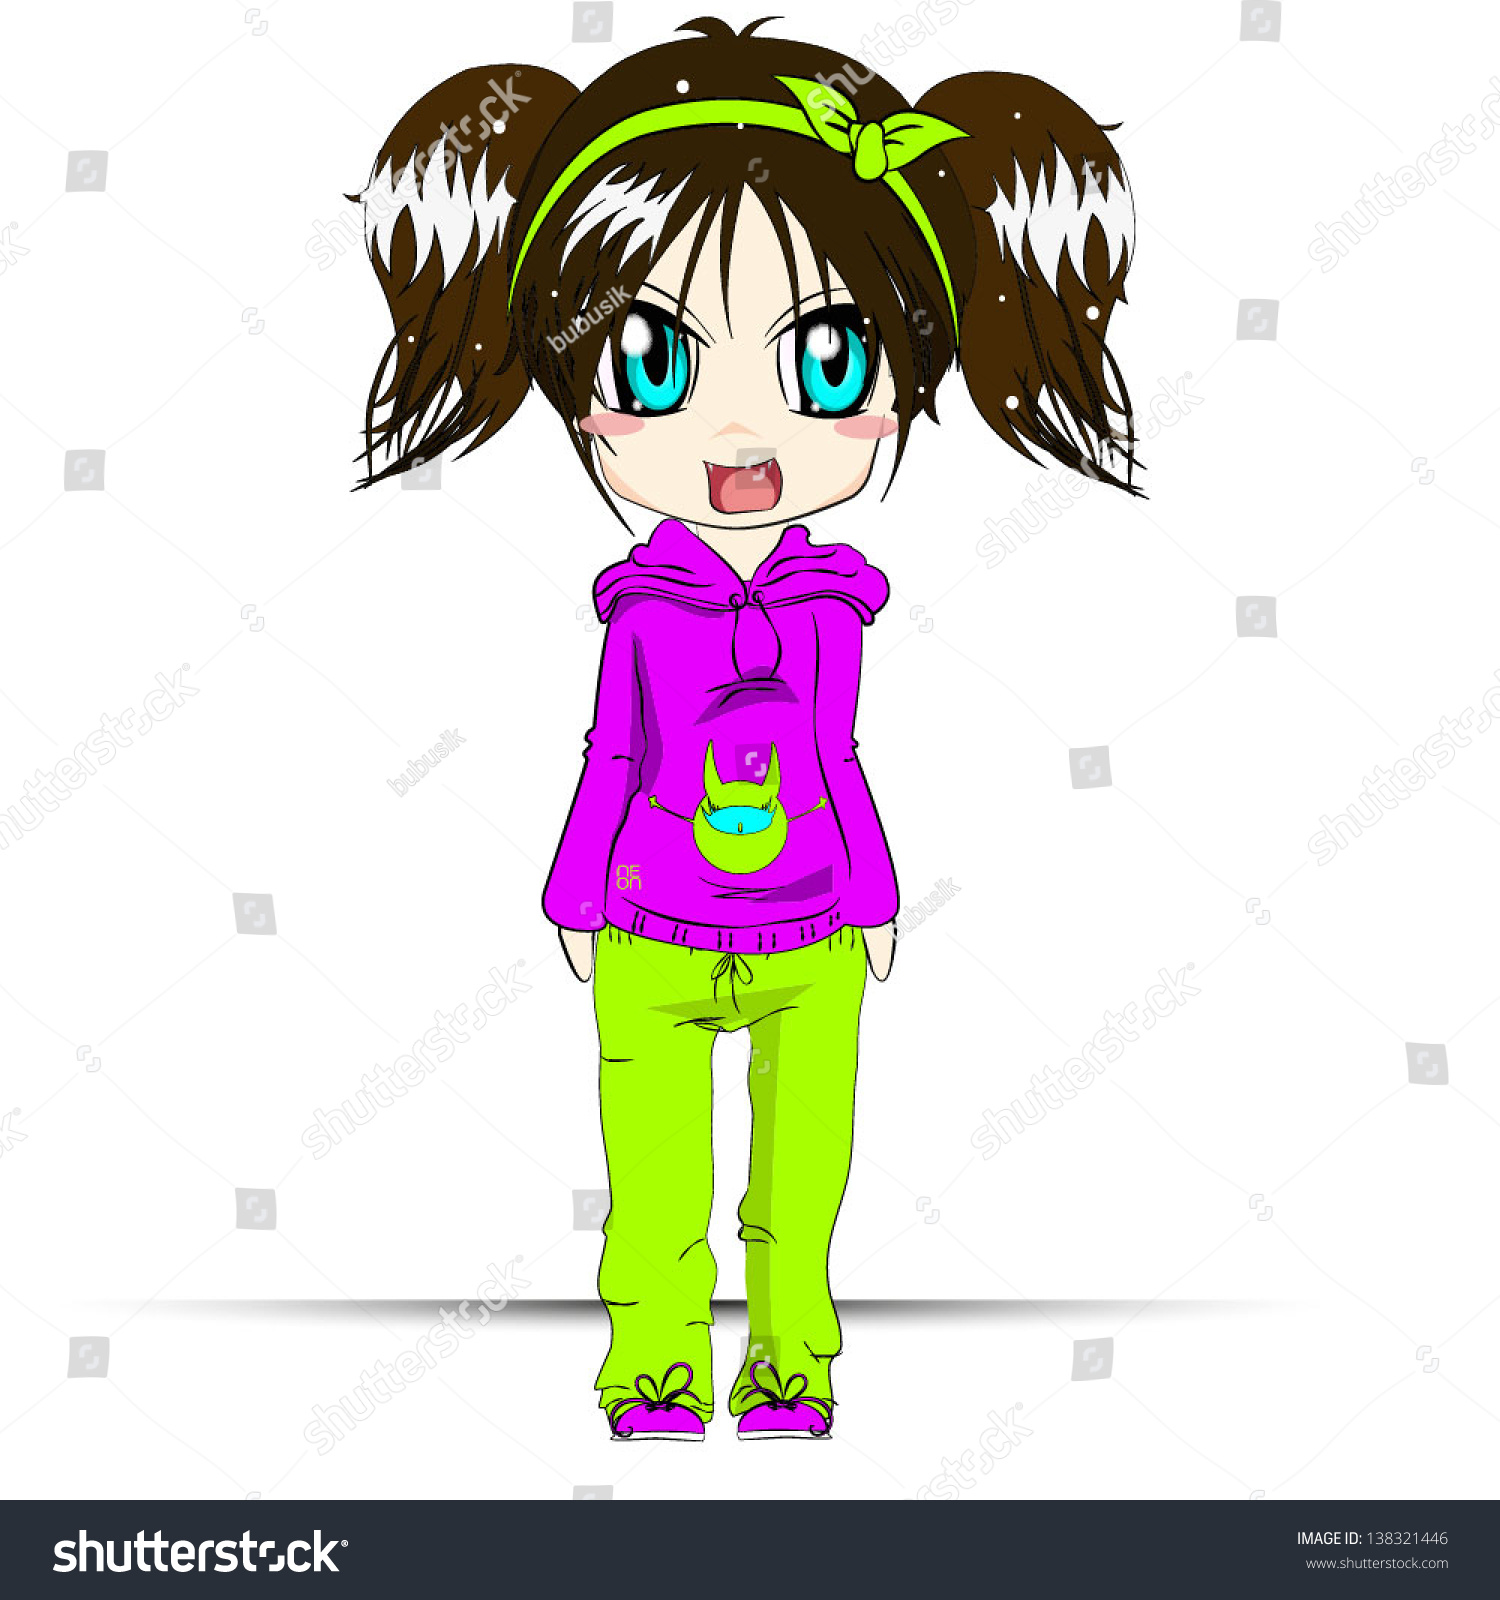 Cute Anime Girl Cartoon Character On Stock Vector Royalty Free